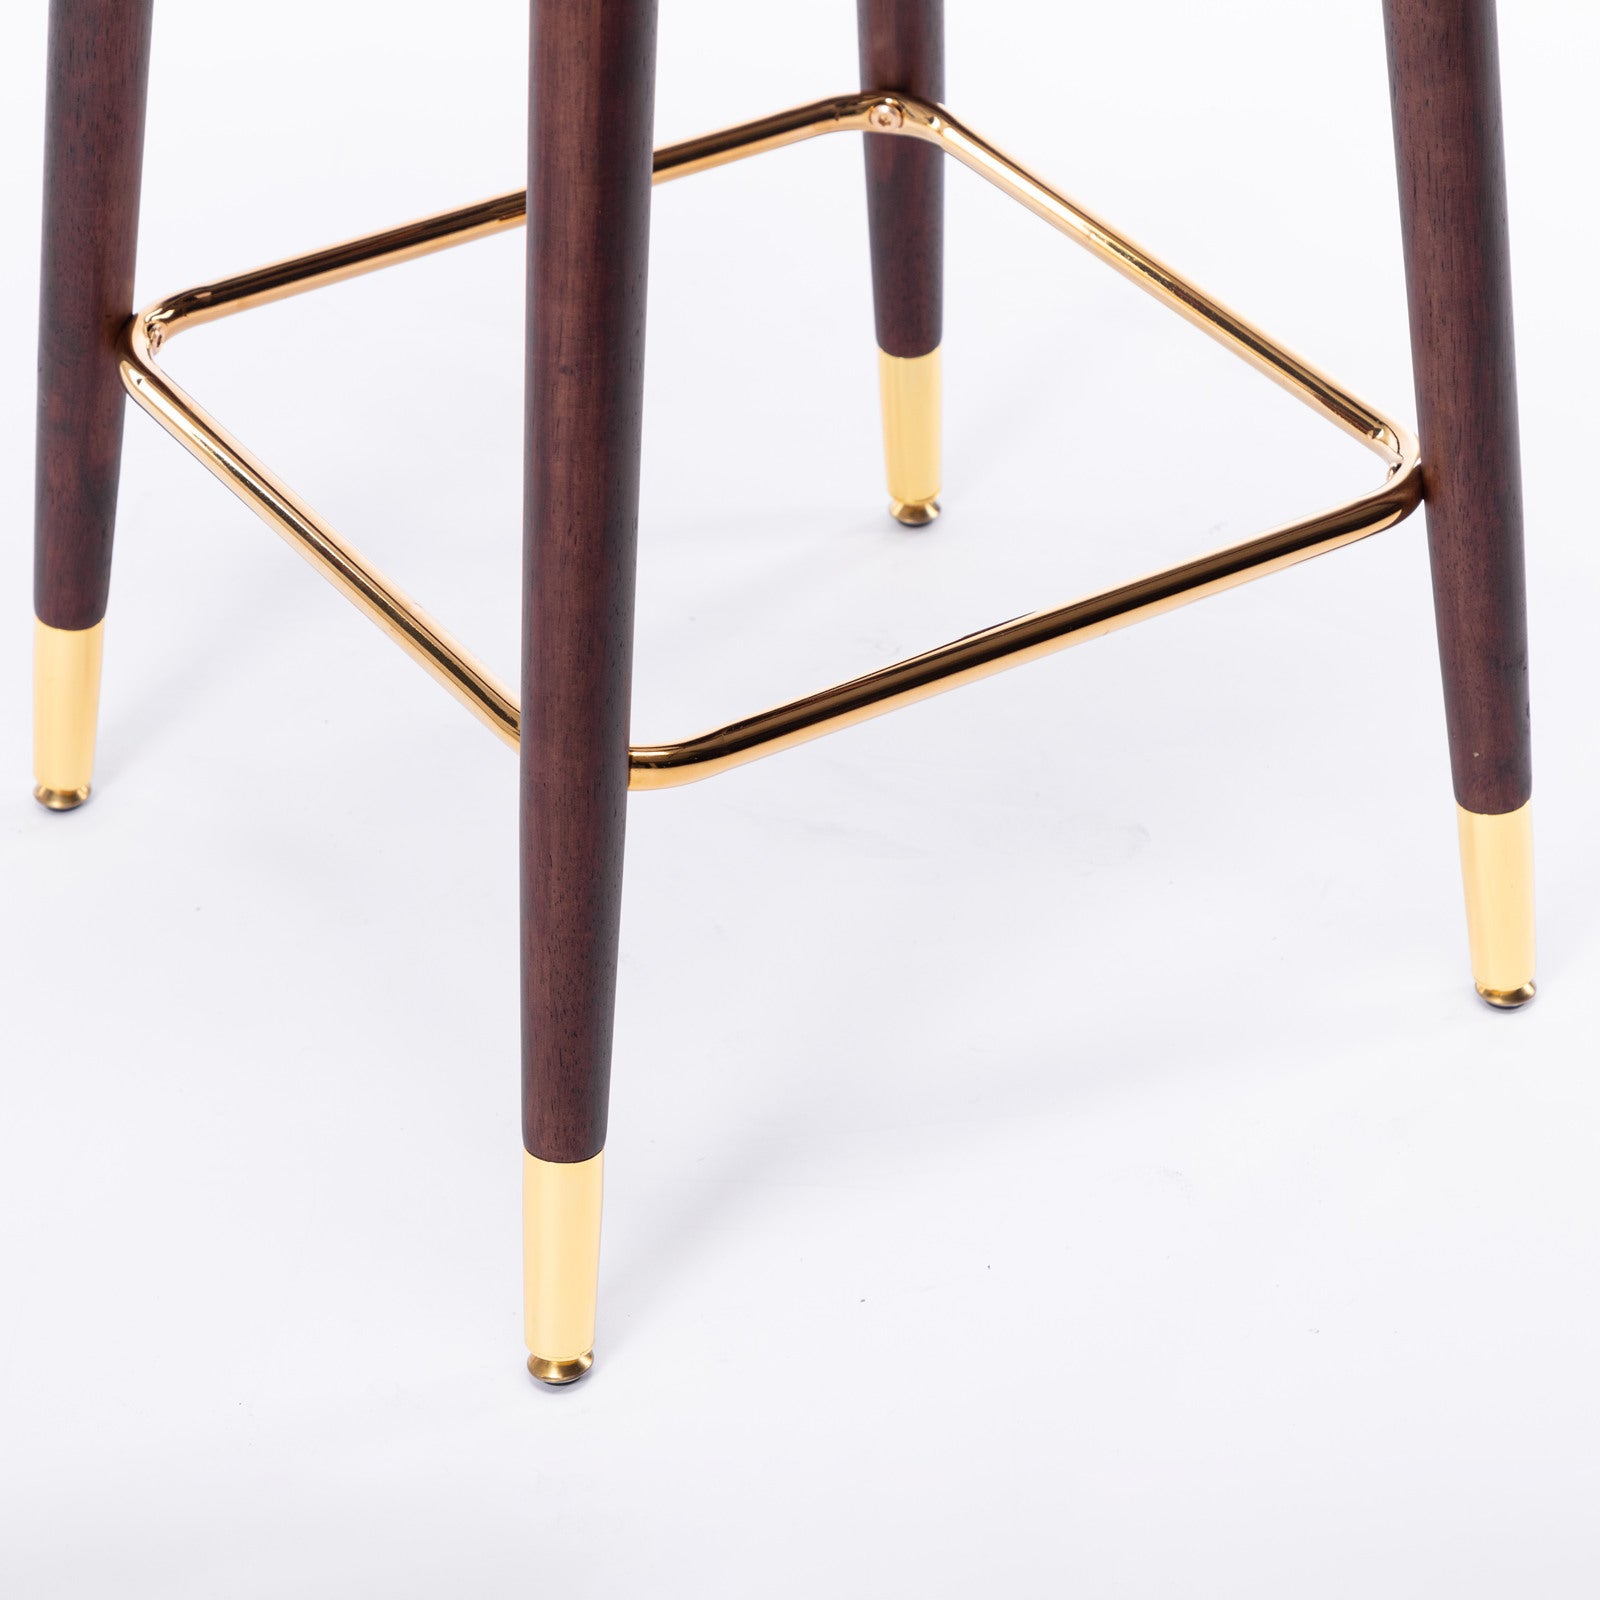 Modern Leathaire Fabric bar chairs, Tufted Gold Nailhead Trim Gold Decoration Bar stools (Set of 2) - Khaki